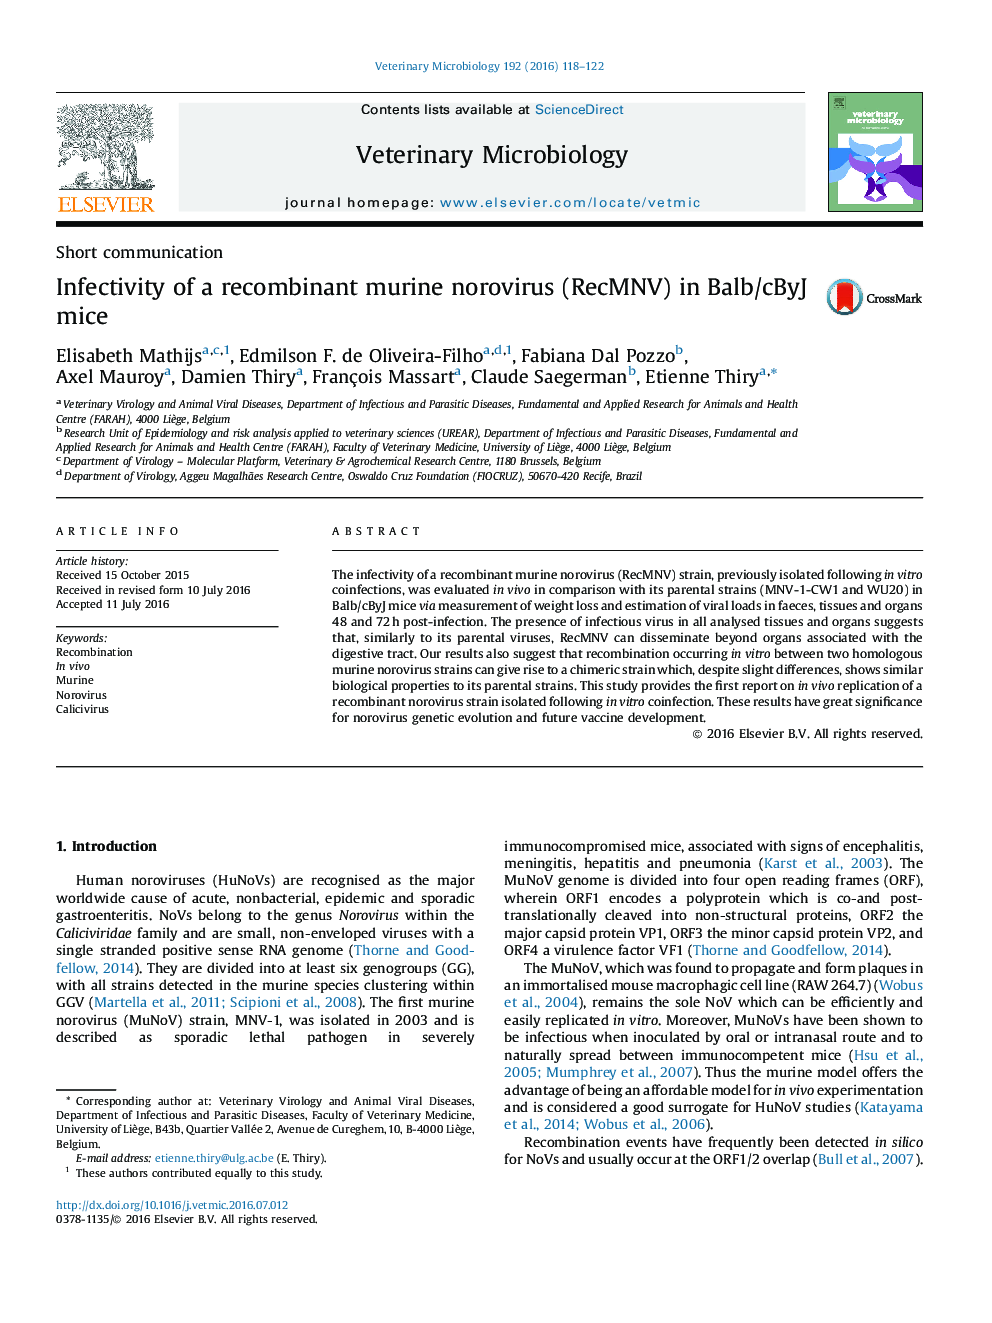 Infectivity of a recombinant murine norovirus (RecMNV) in Balb/cByJ mice